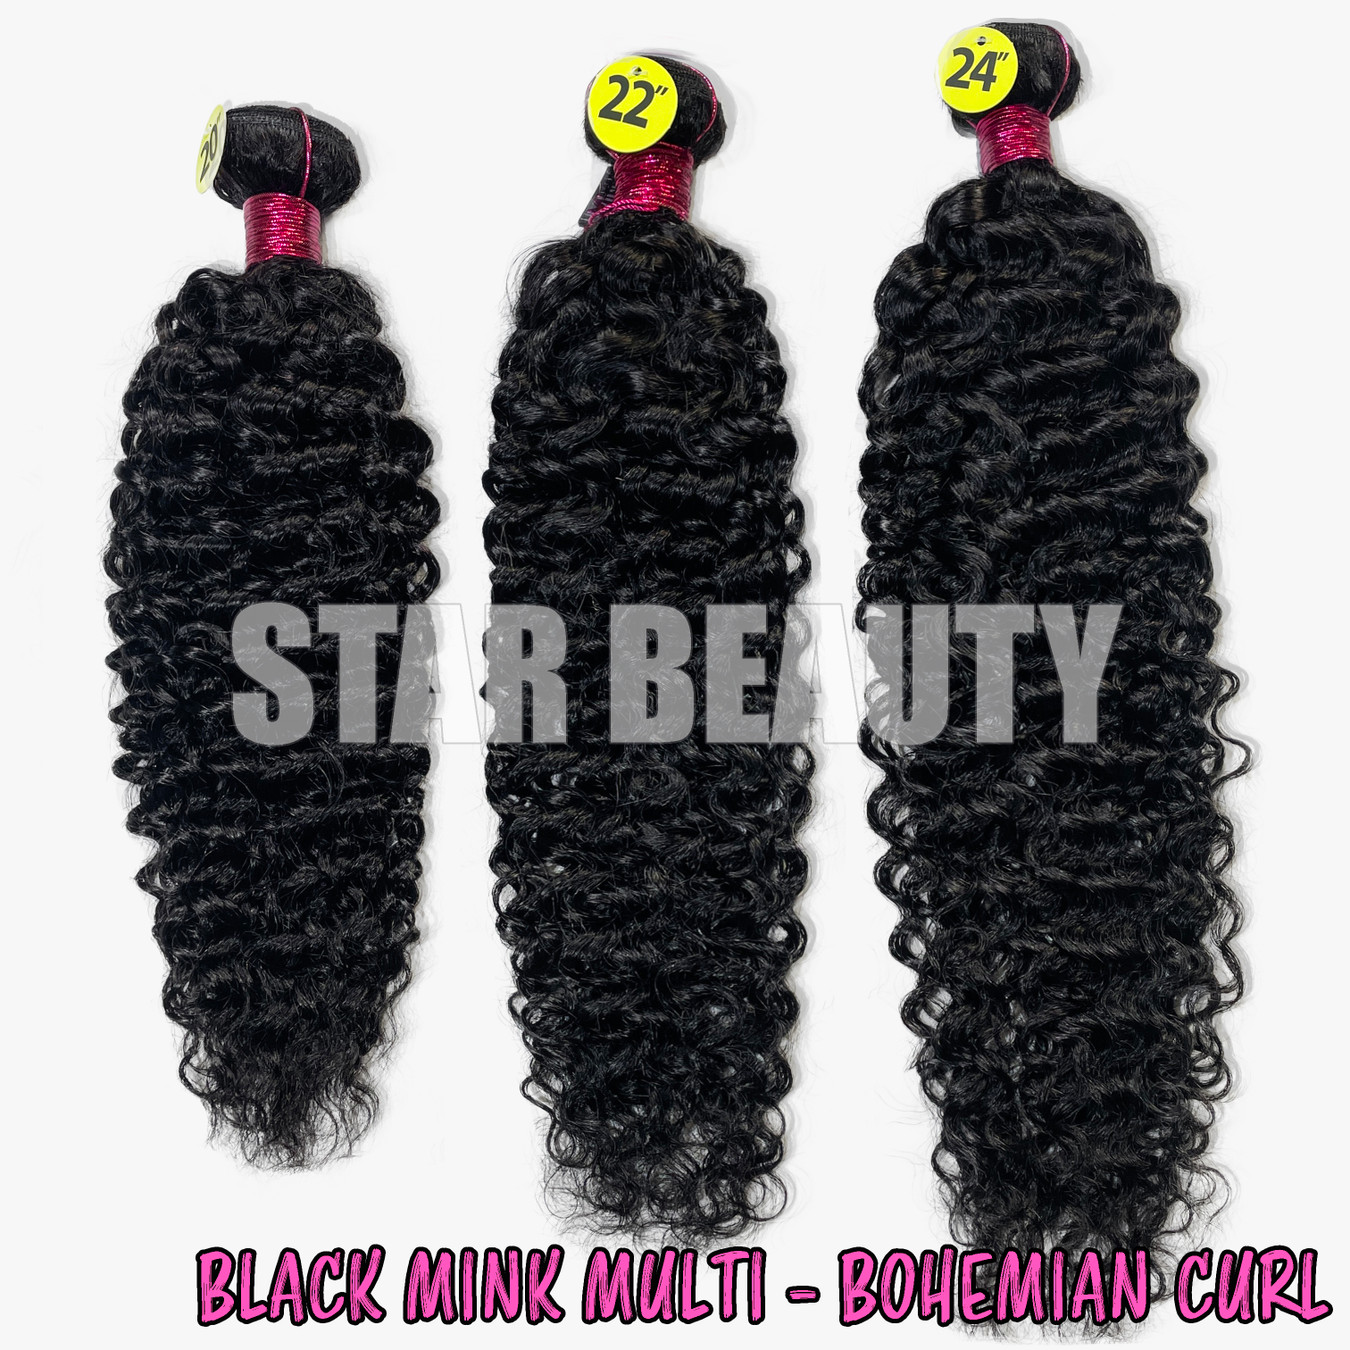 Black Mink Multi Pack - Bohemian Curl